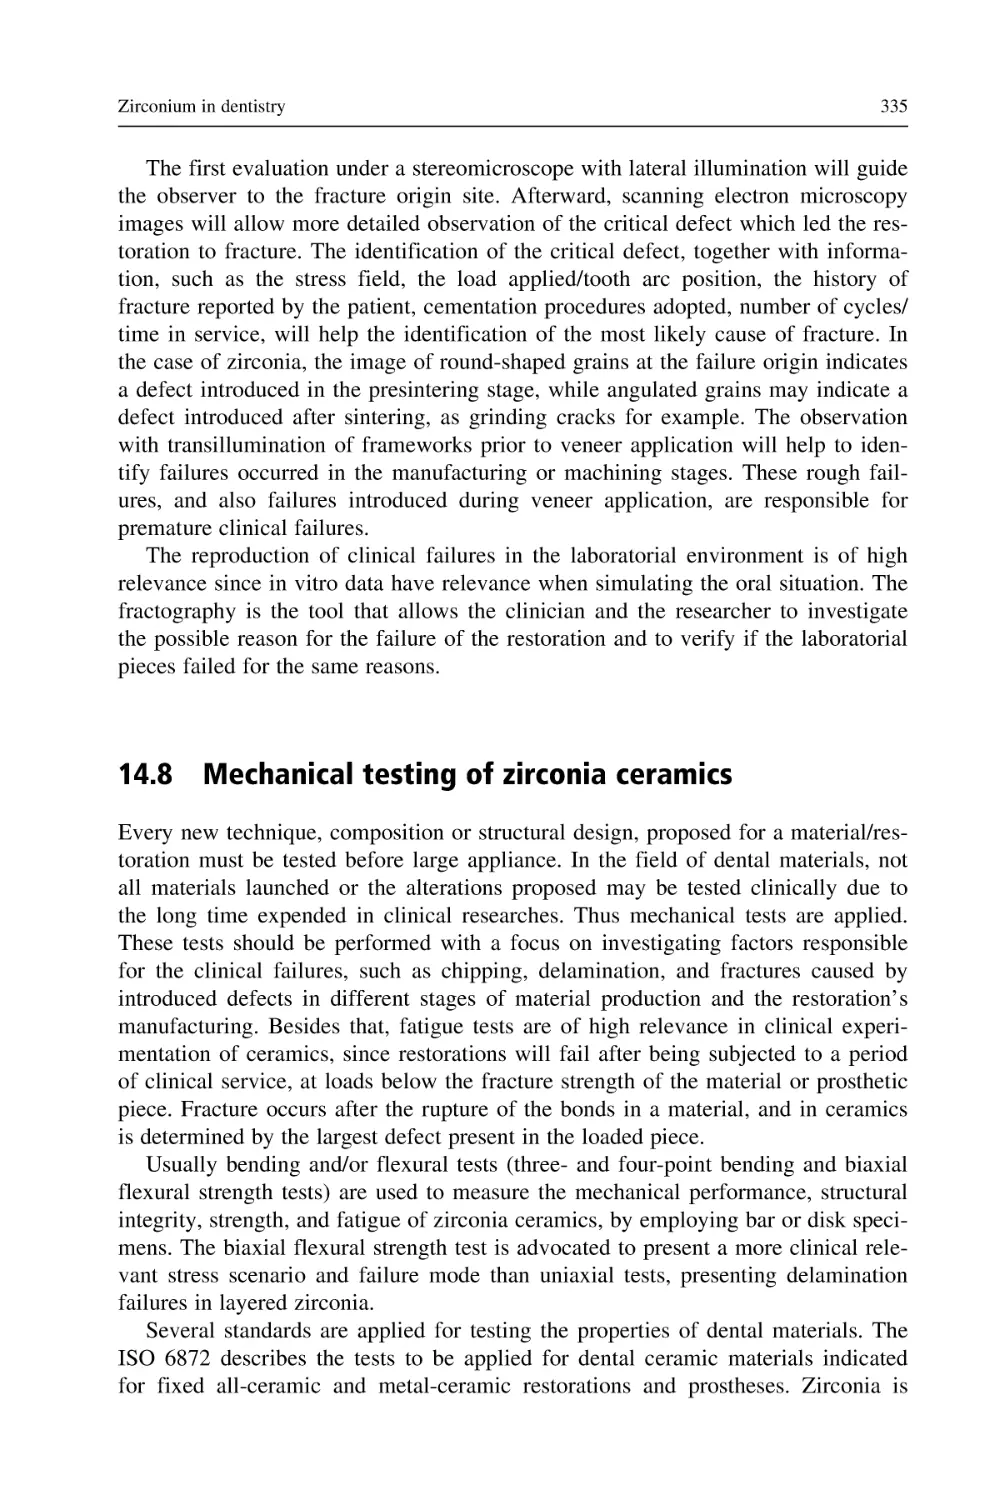 14.8 Mechanical testing of zirconia ceramics